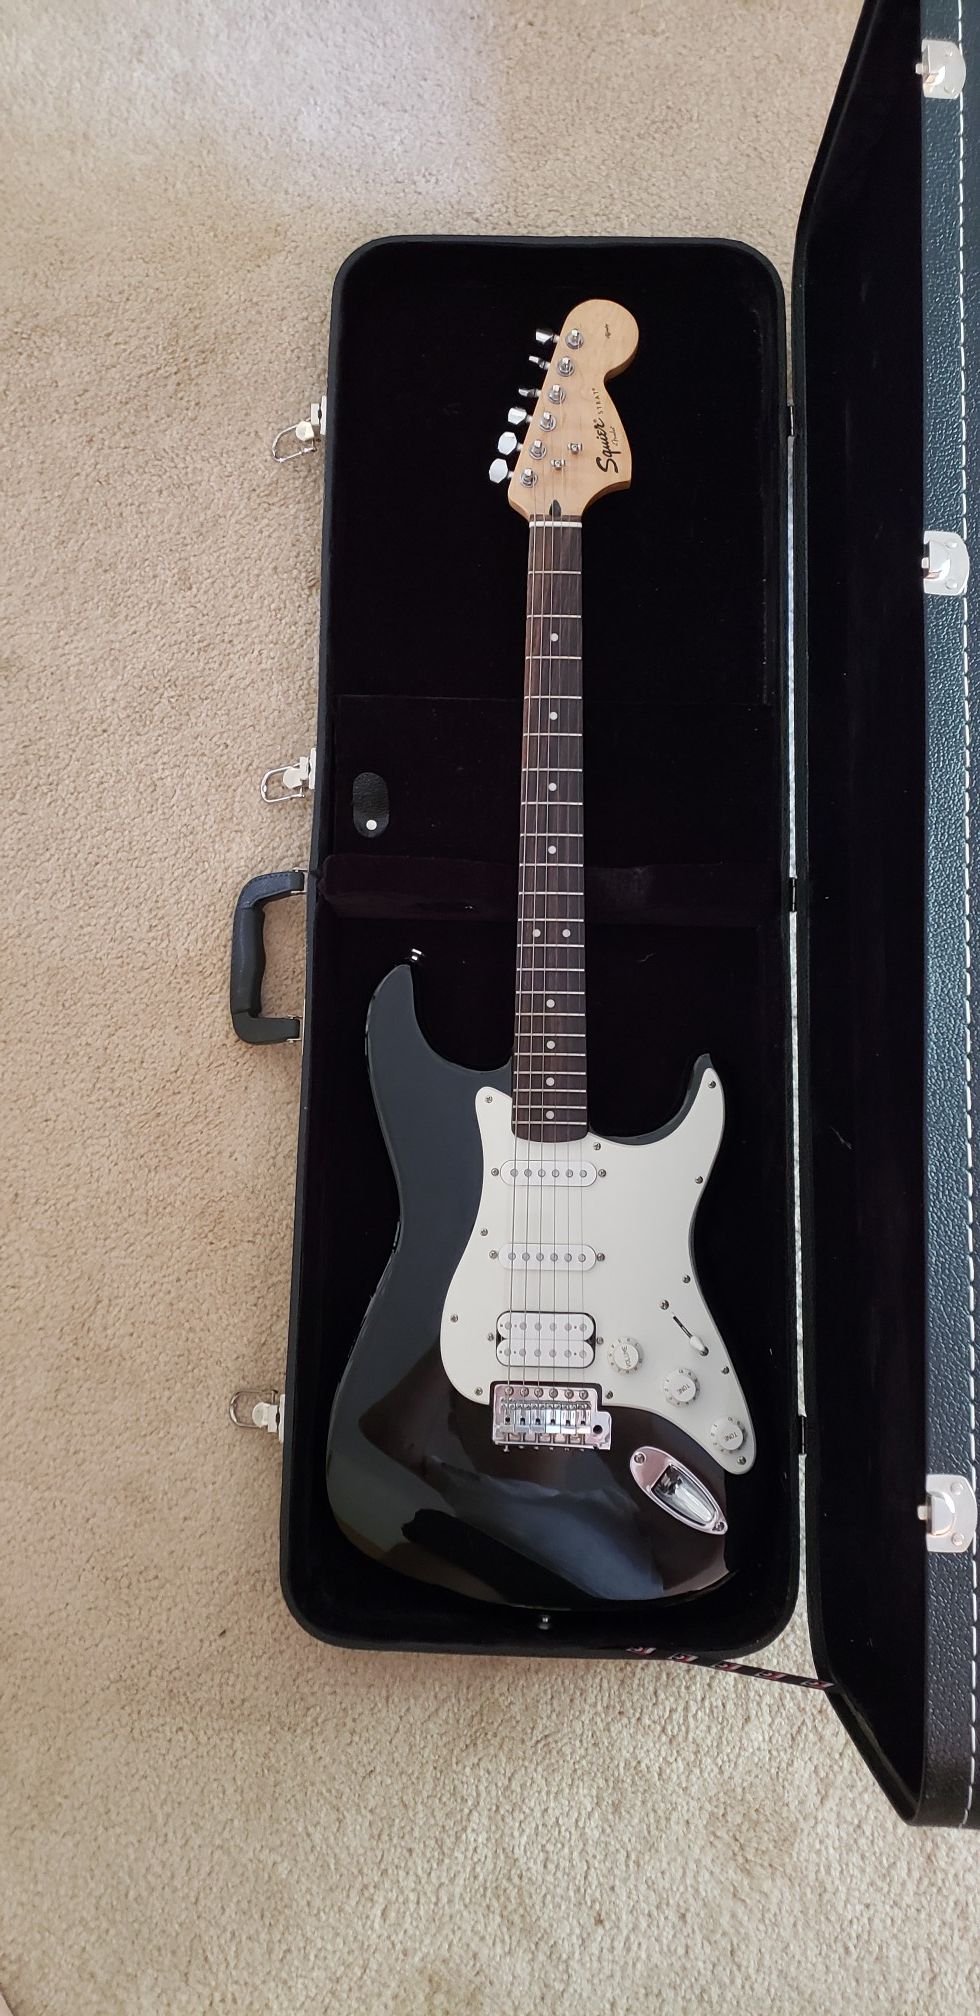 Fender Squier electric guitar